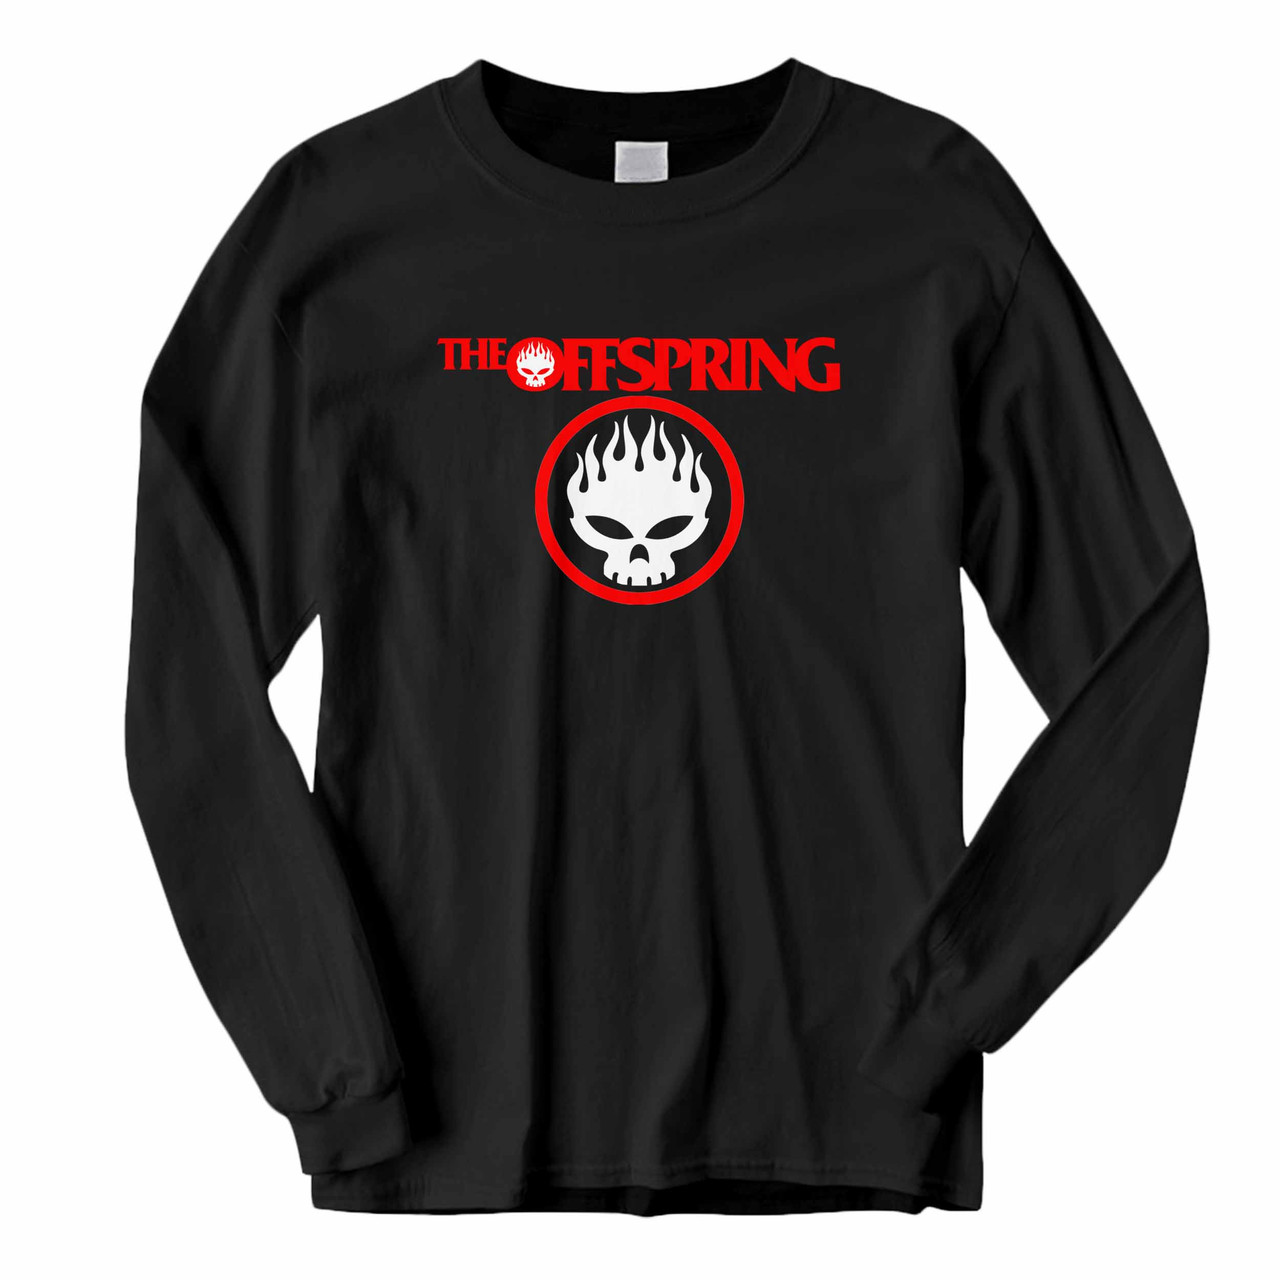 The Offspring Logo Rock Band Long Sleeve Shirt